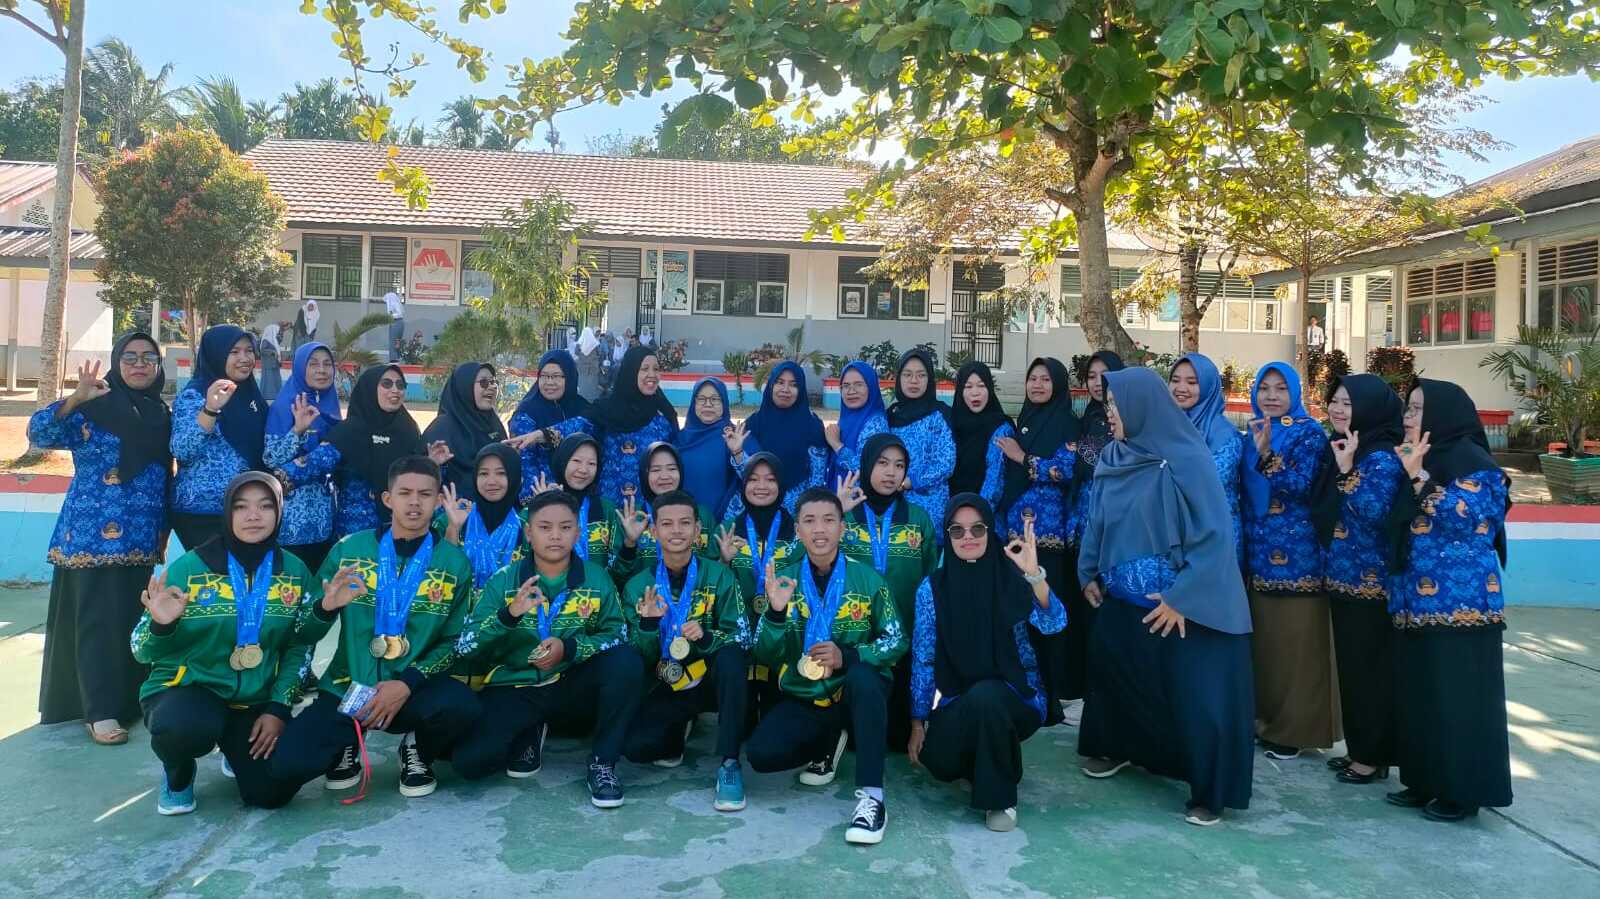 Sekolah SMA Negeri 1 Banding Agung Sambut dan Apresiasi Atlet-Atlet Arung Jeram OKU Selatan